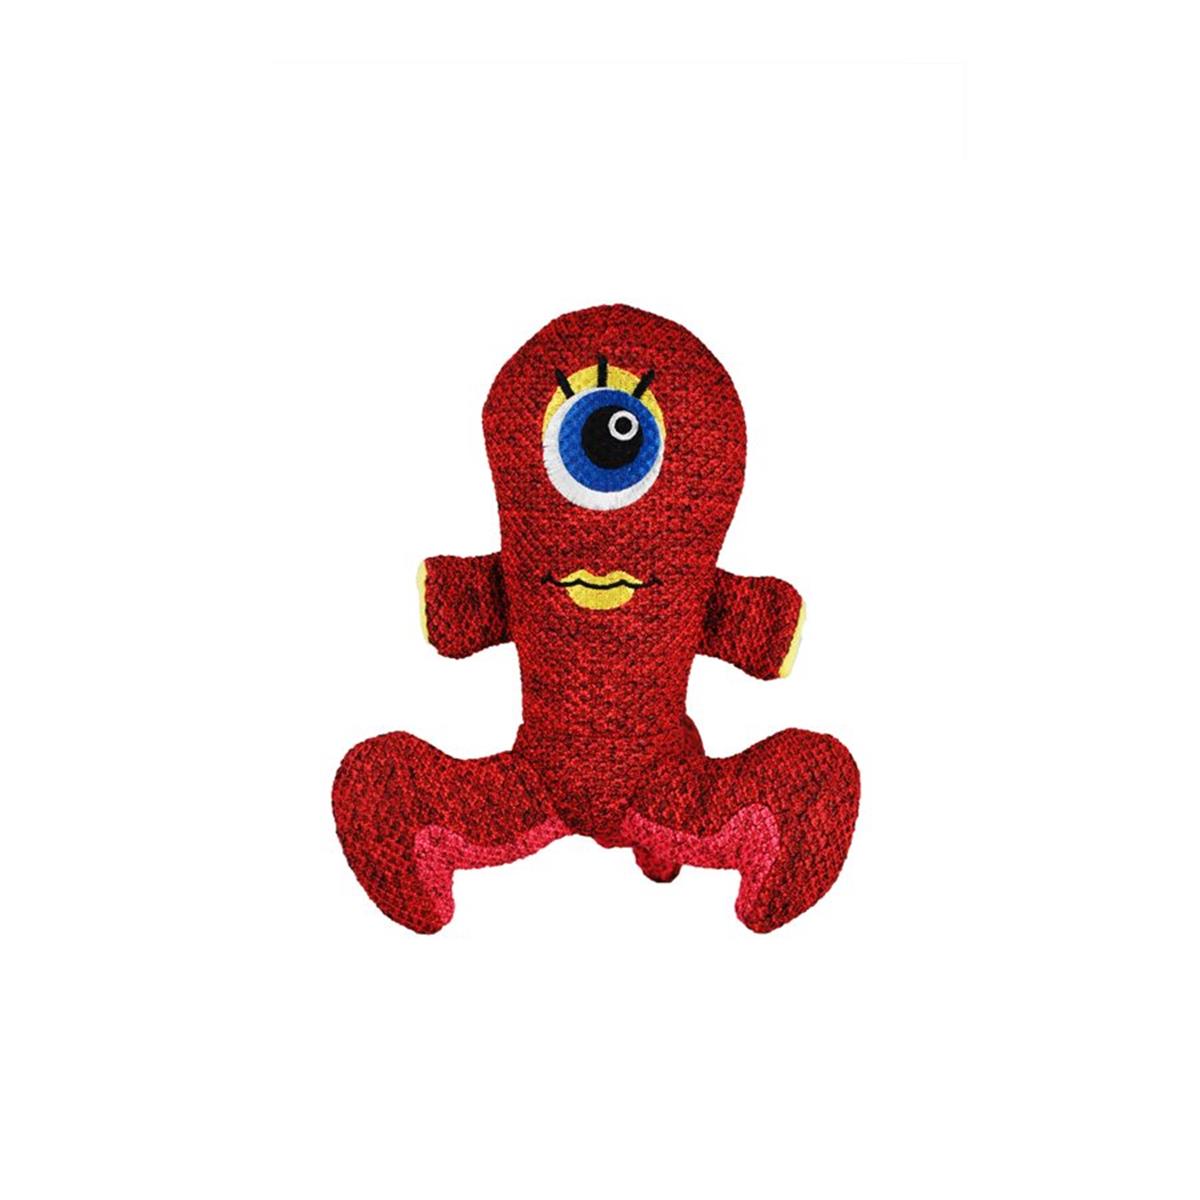 Kc36132 Woozles Toy, Medium - Red